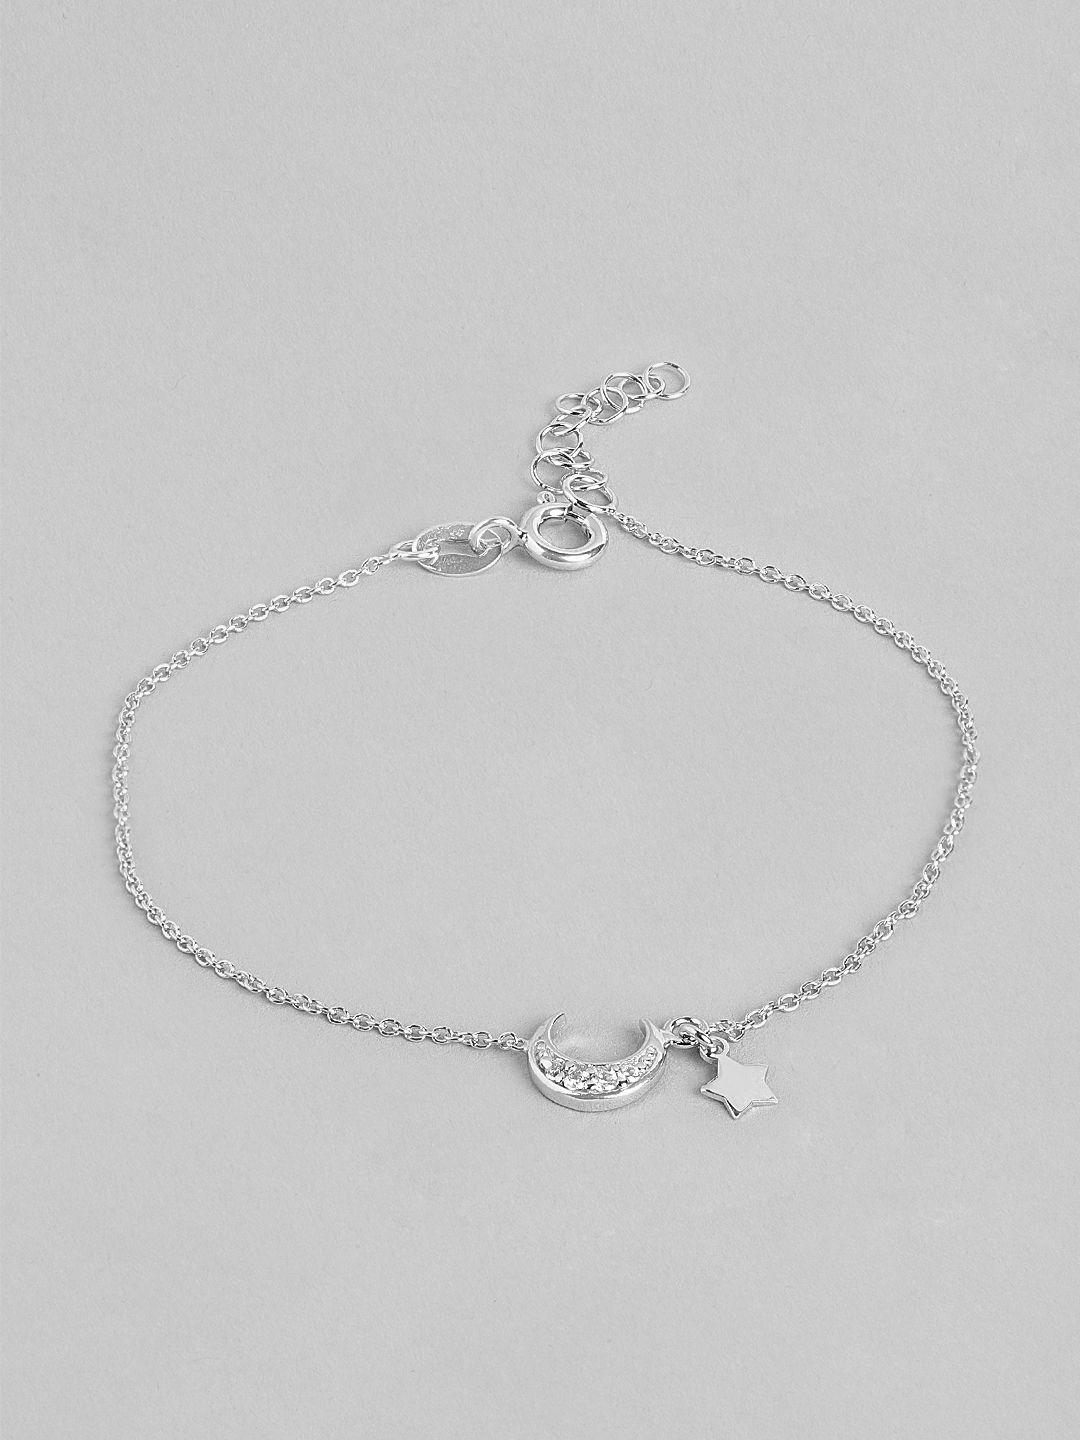 carlton-london-925-sterling-silver-rhodium-plated-moon-&-stars-charm-bracelet-adjustable